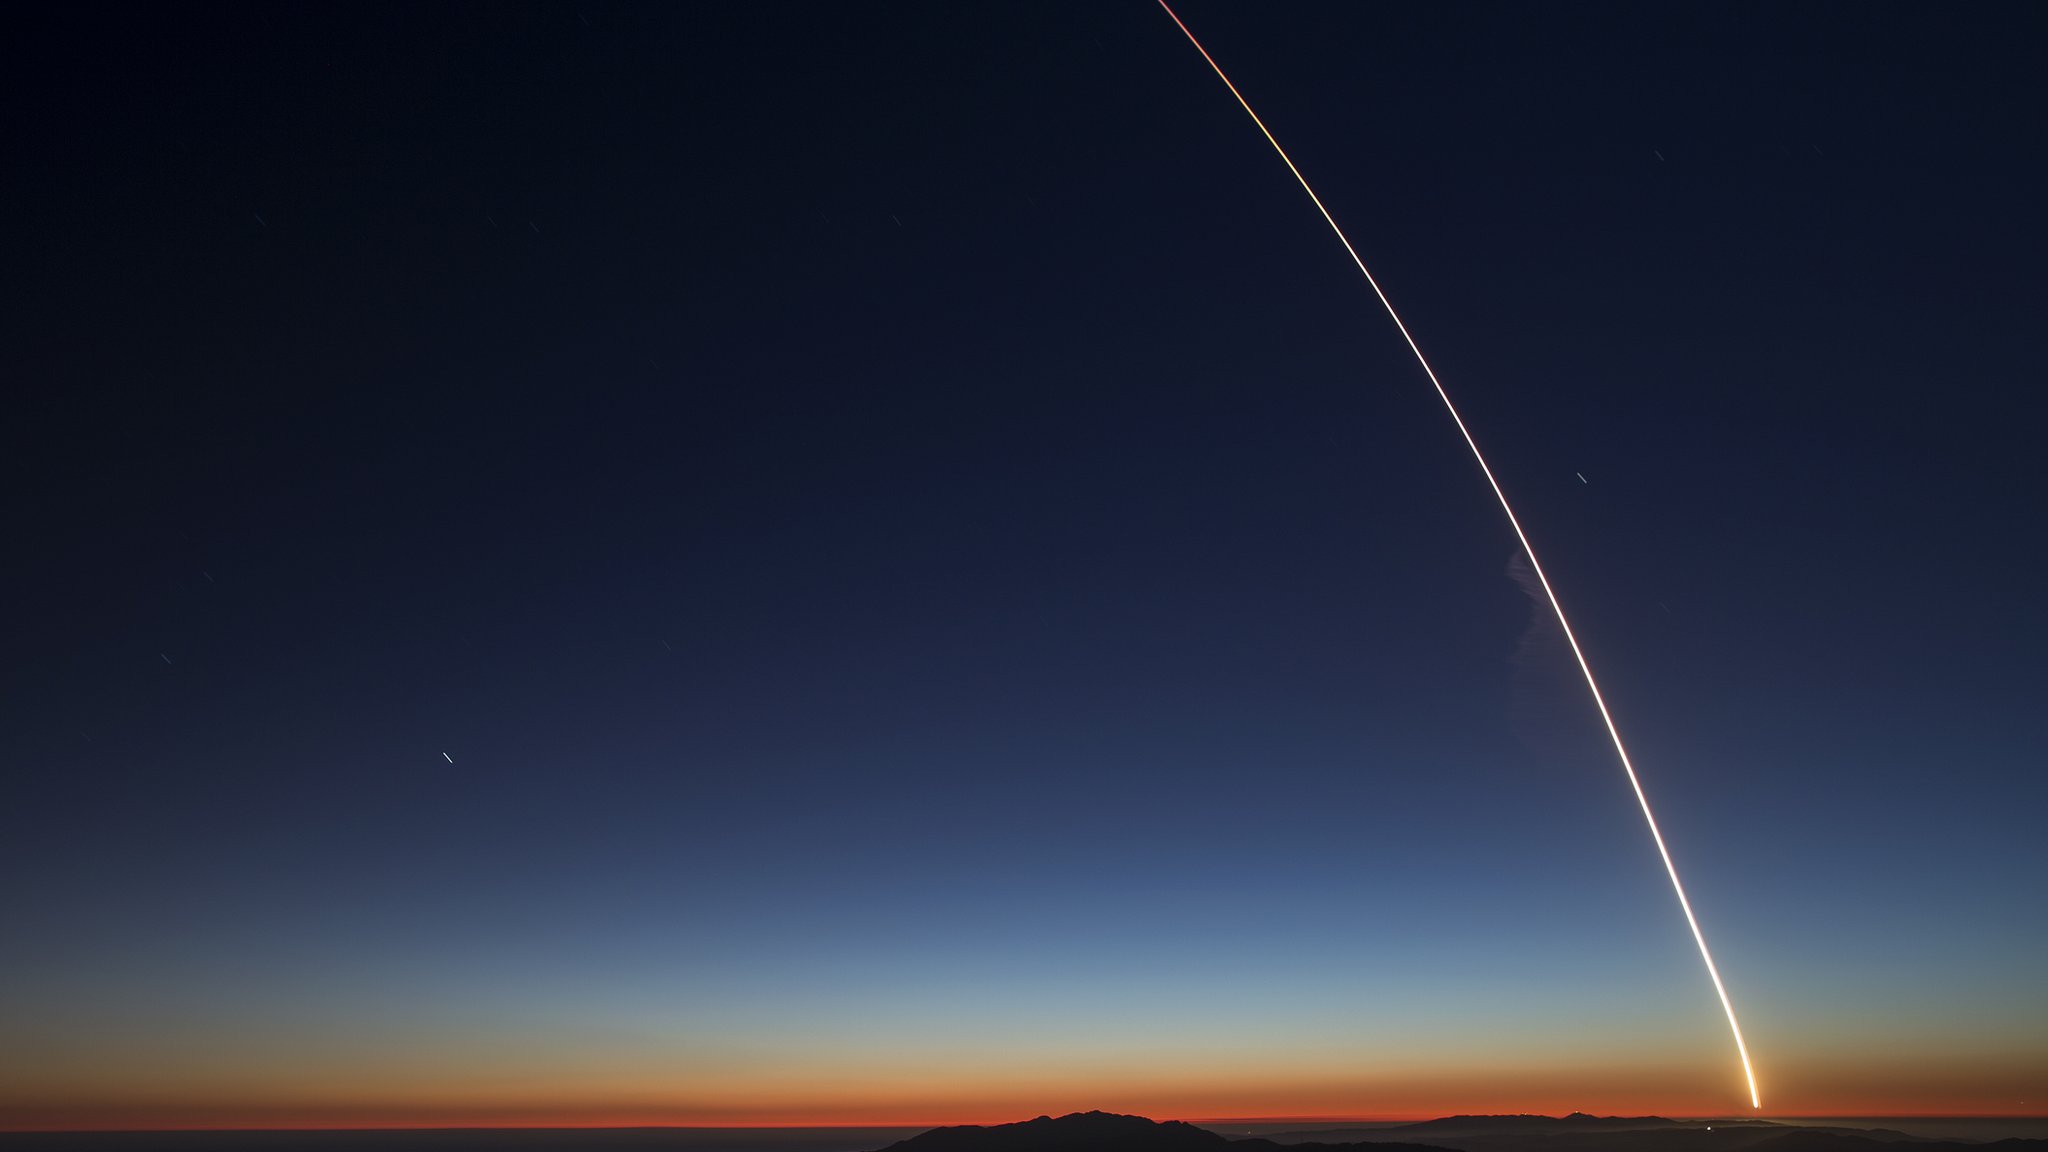 Elon Musk's SpaceX rocket lights up California sky